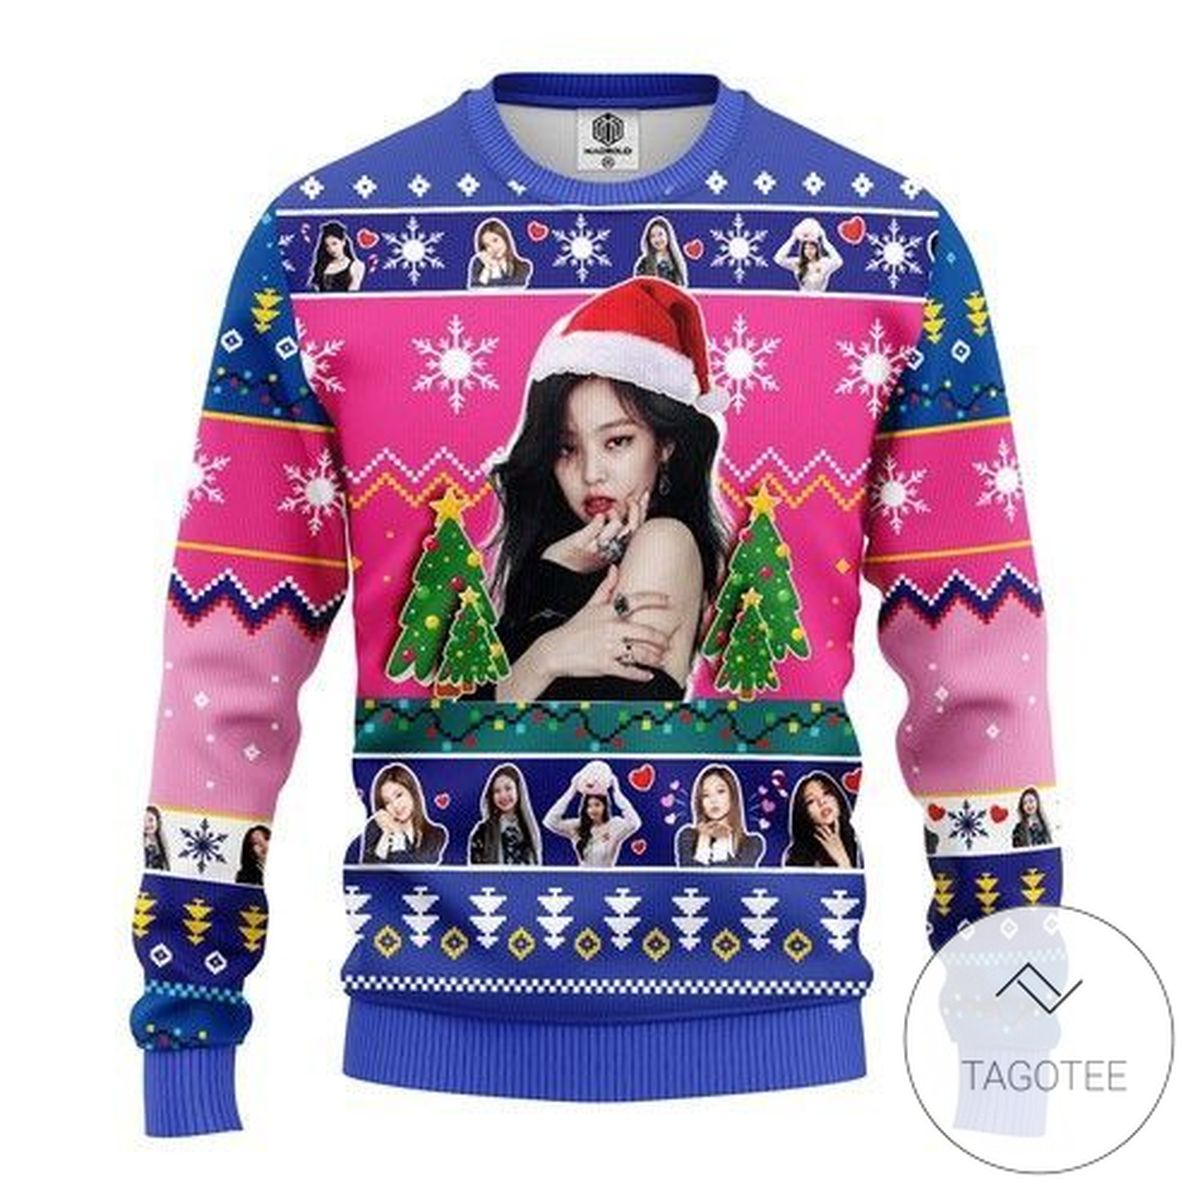 Jenny Sweatshirt Knitted Ugly Christmas Sweater